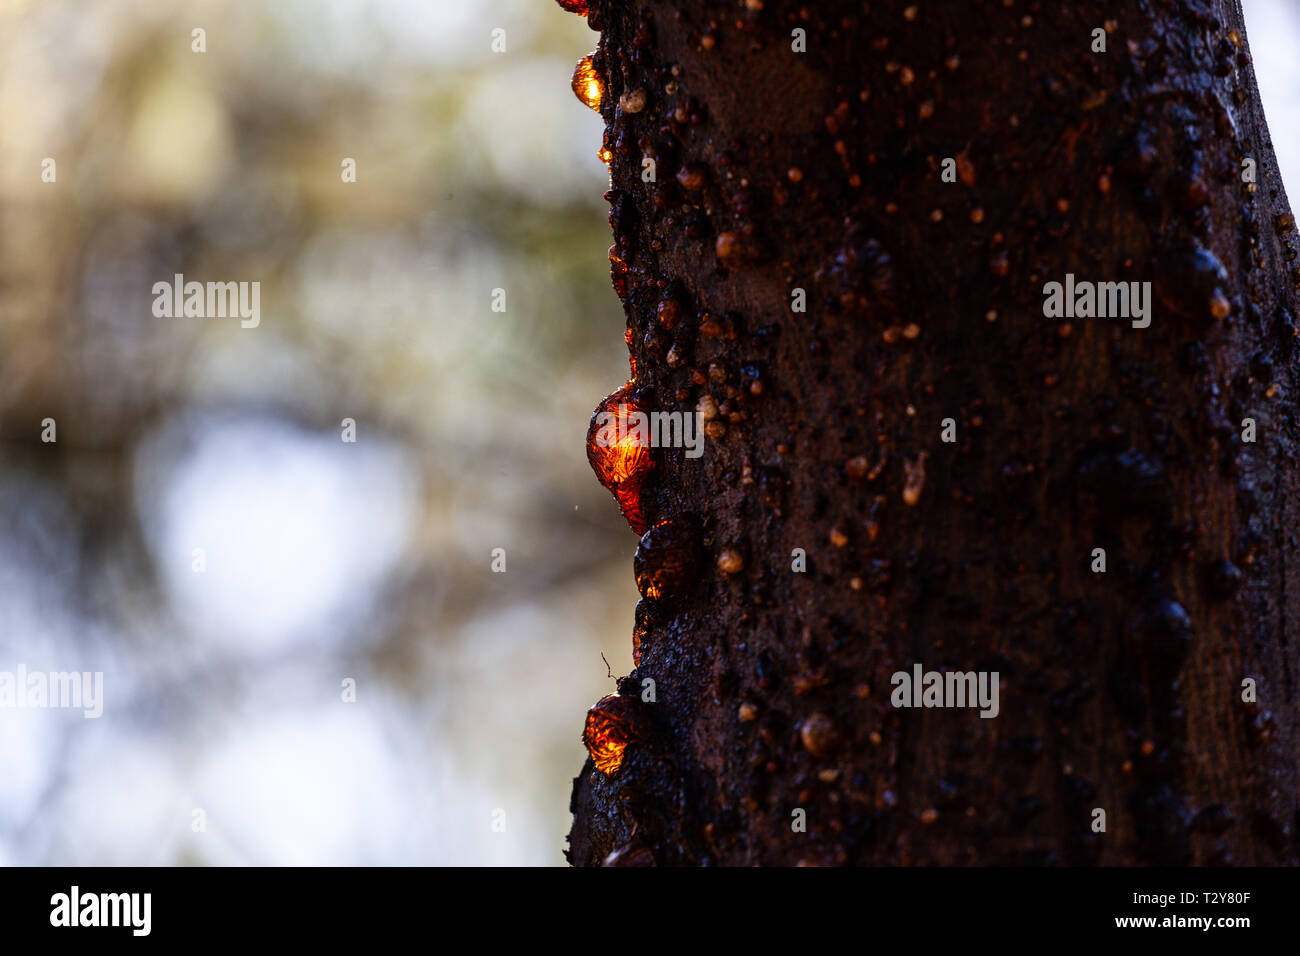 Gum tree sap glowing in the sun extreme closeup Stock Photo